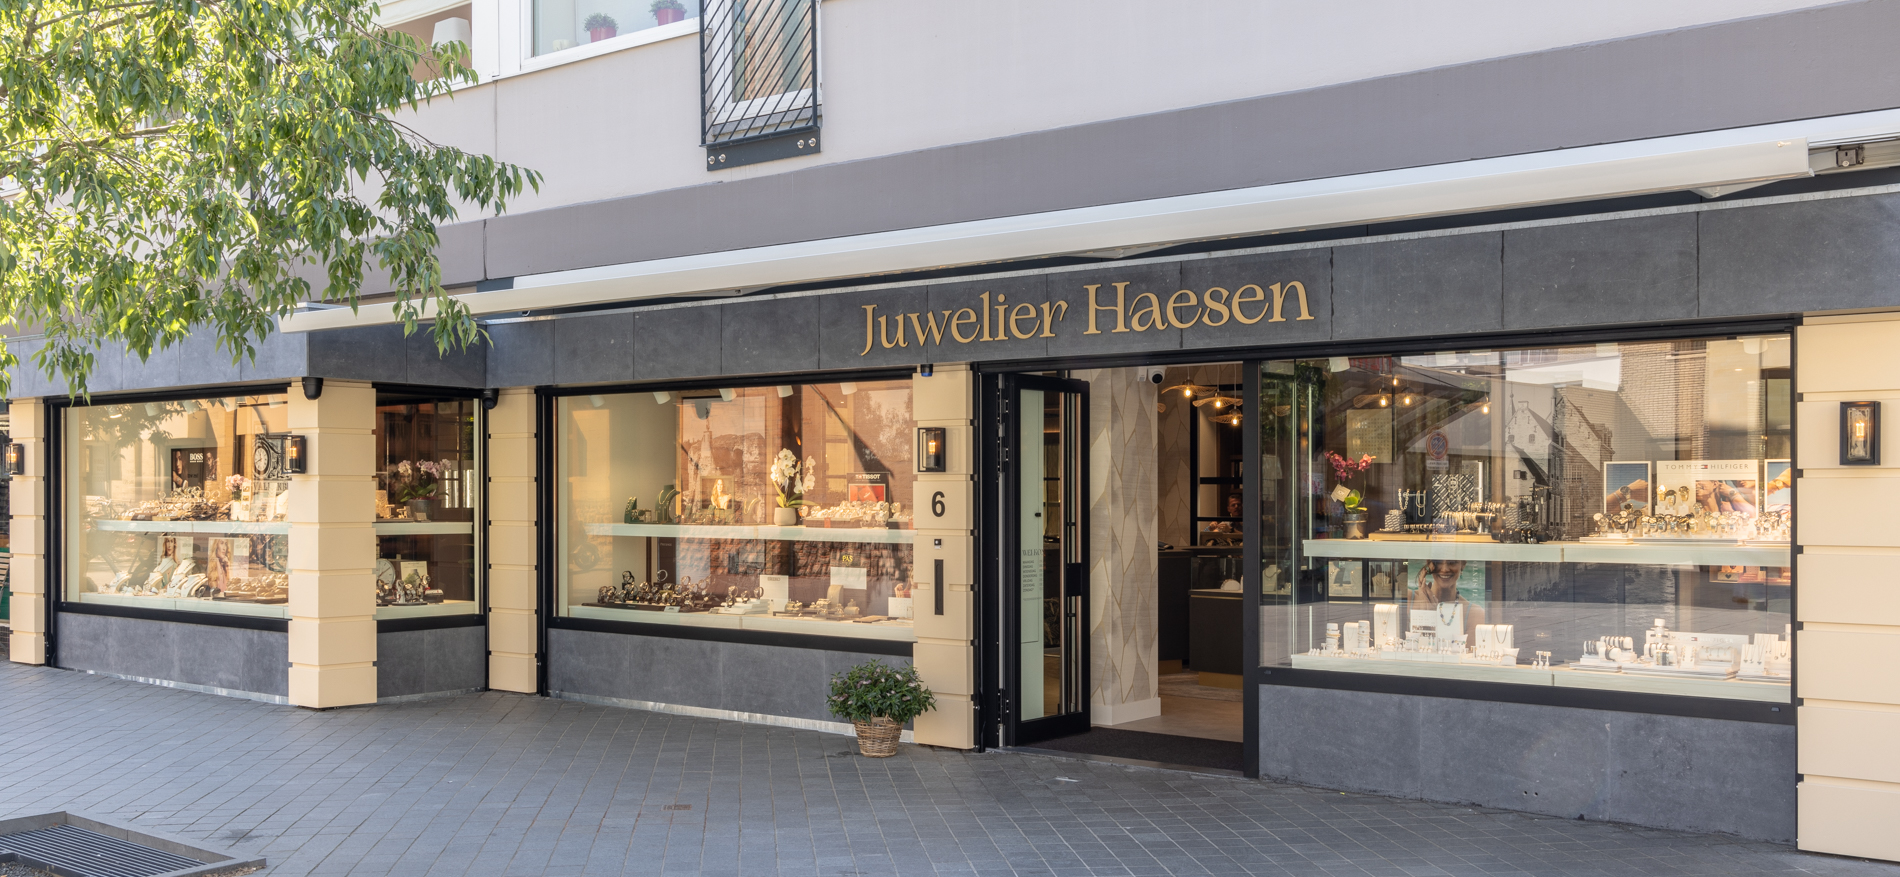 Juwelier Haesen | Valkenburg - Jeweler